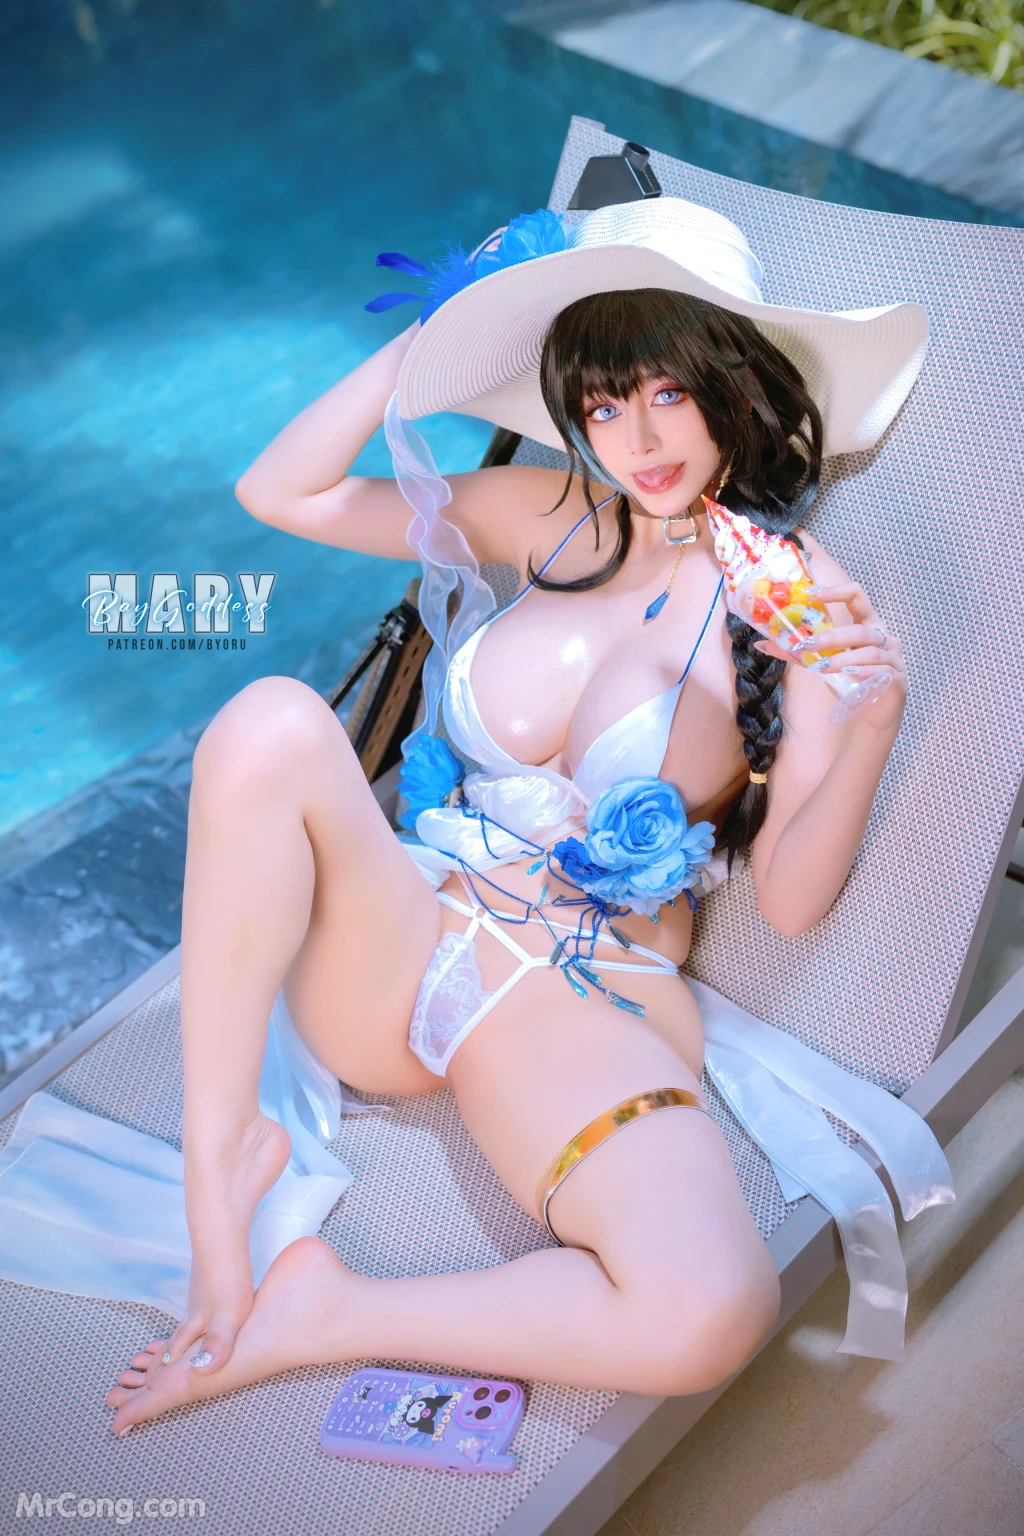 Coser@Byoru: Mary Bay Goddess (52 photos)